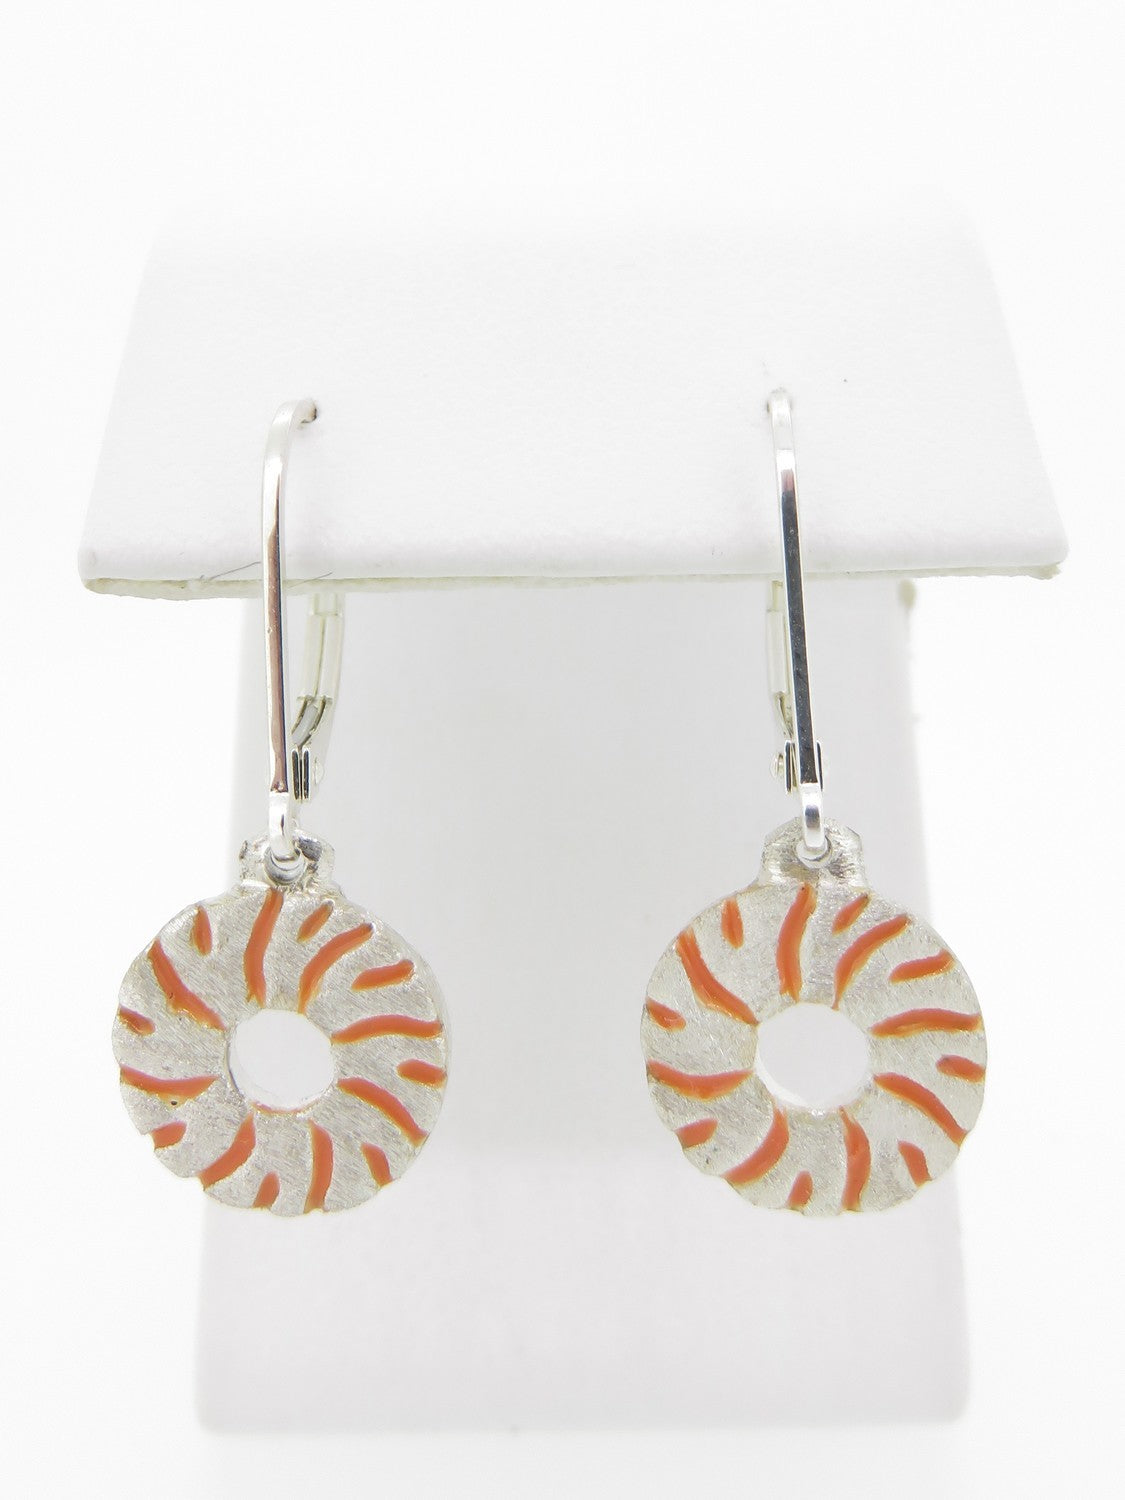 Small Millstone Earrings with Orange